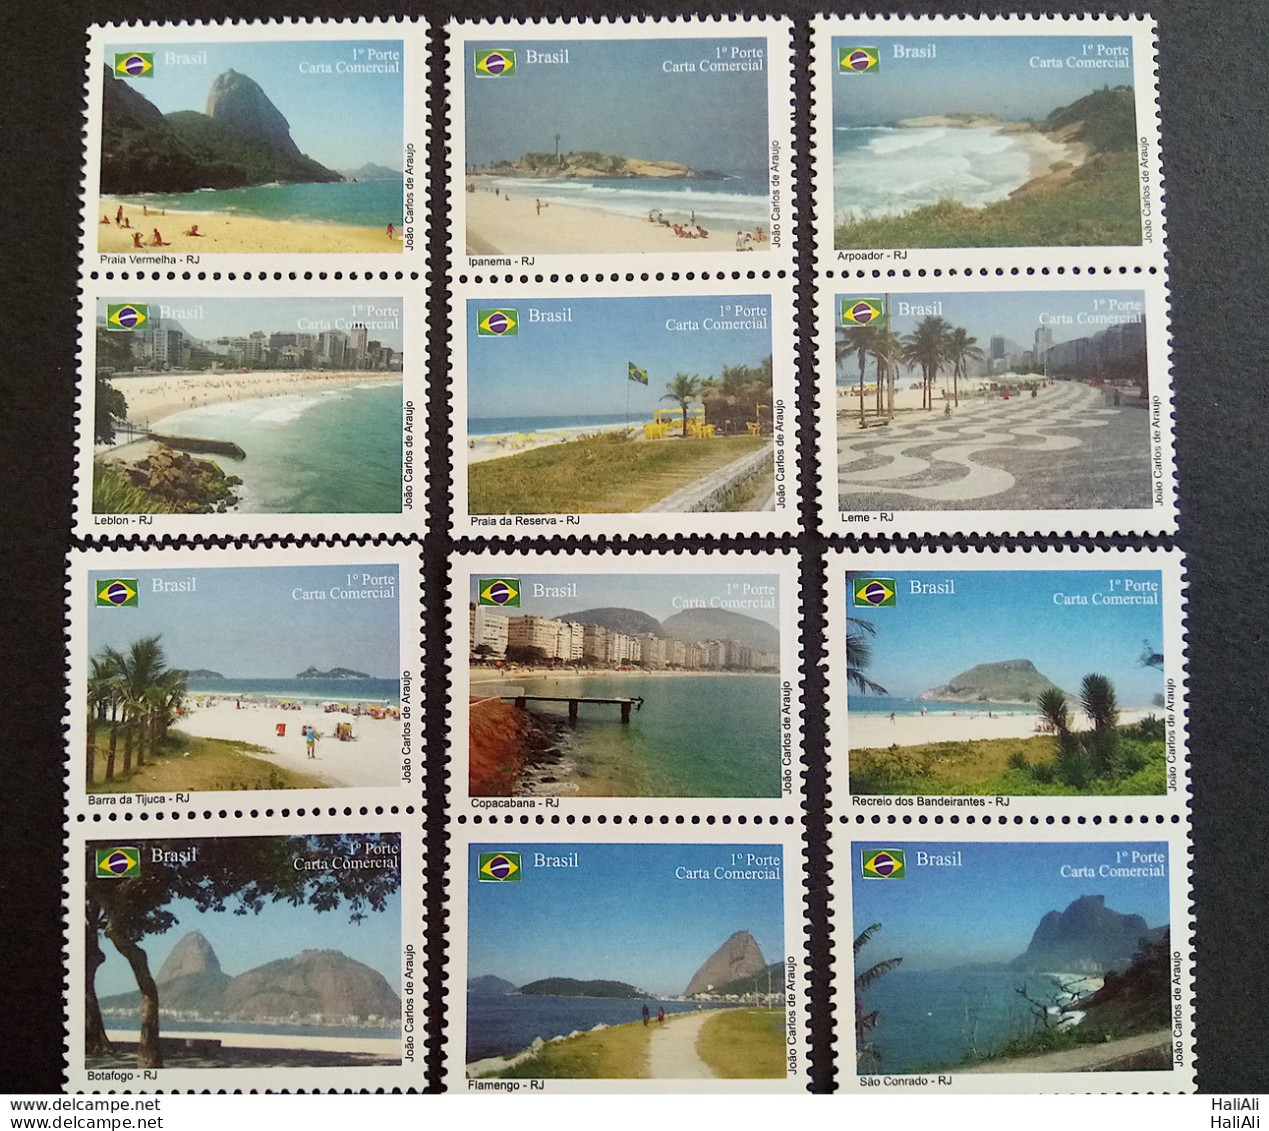 C 2927 Brazil Depersonalized Stamp Tourism Rio De Janeiro Cariocas Beach 2009 Complete Series - Personalized Stamps